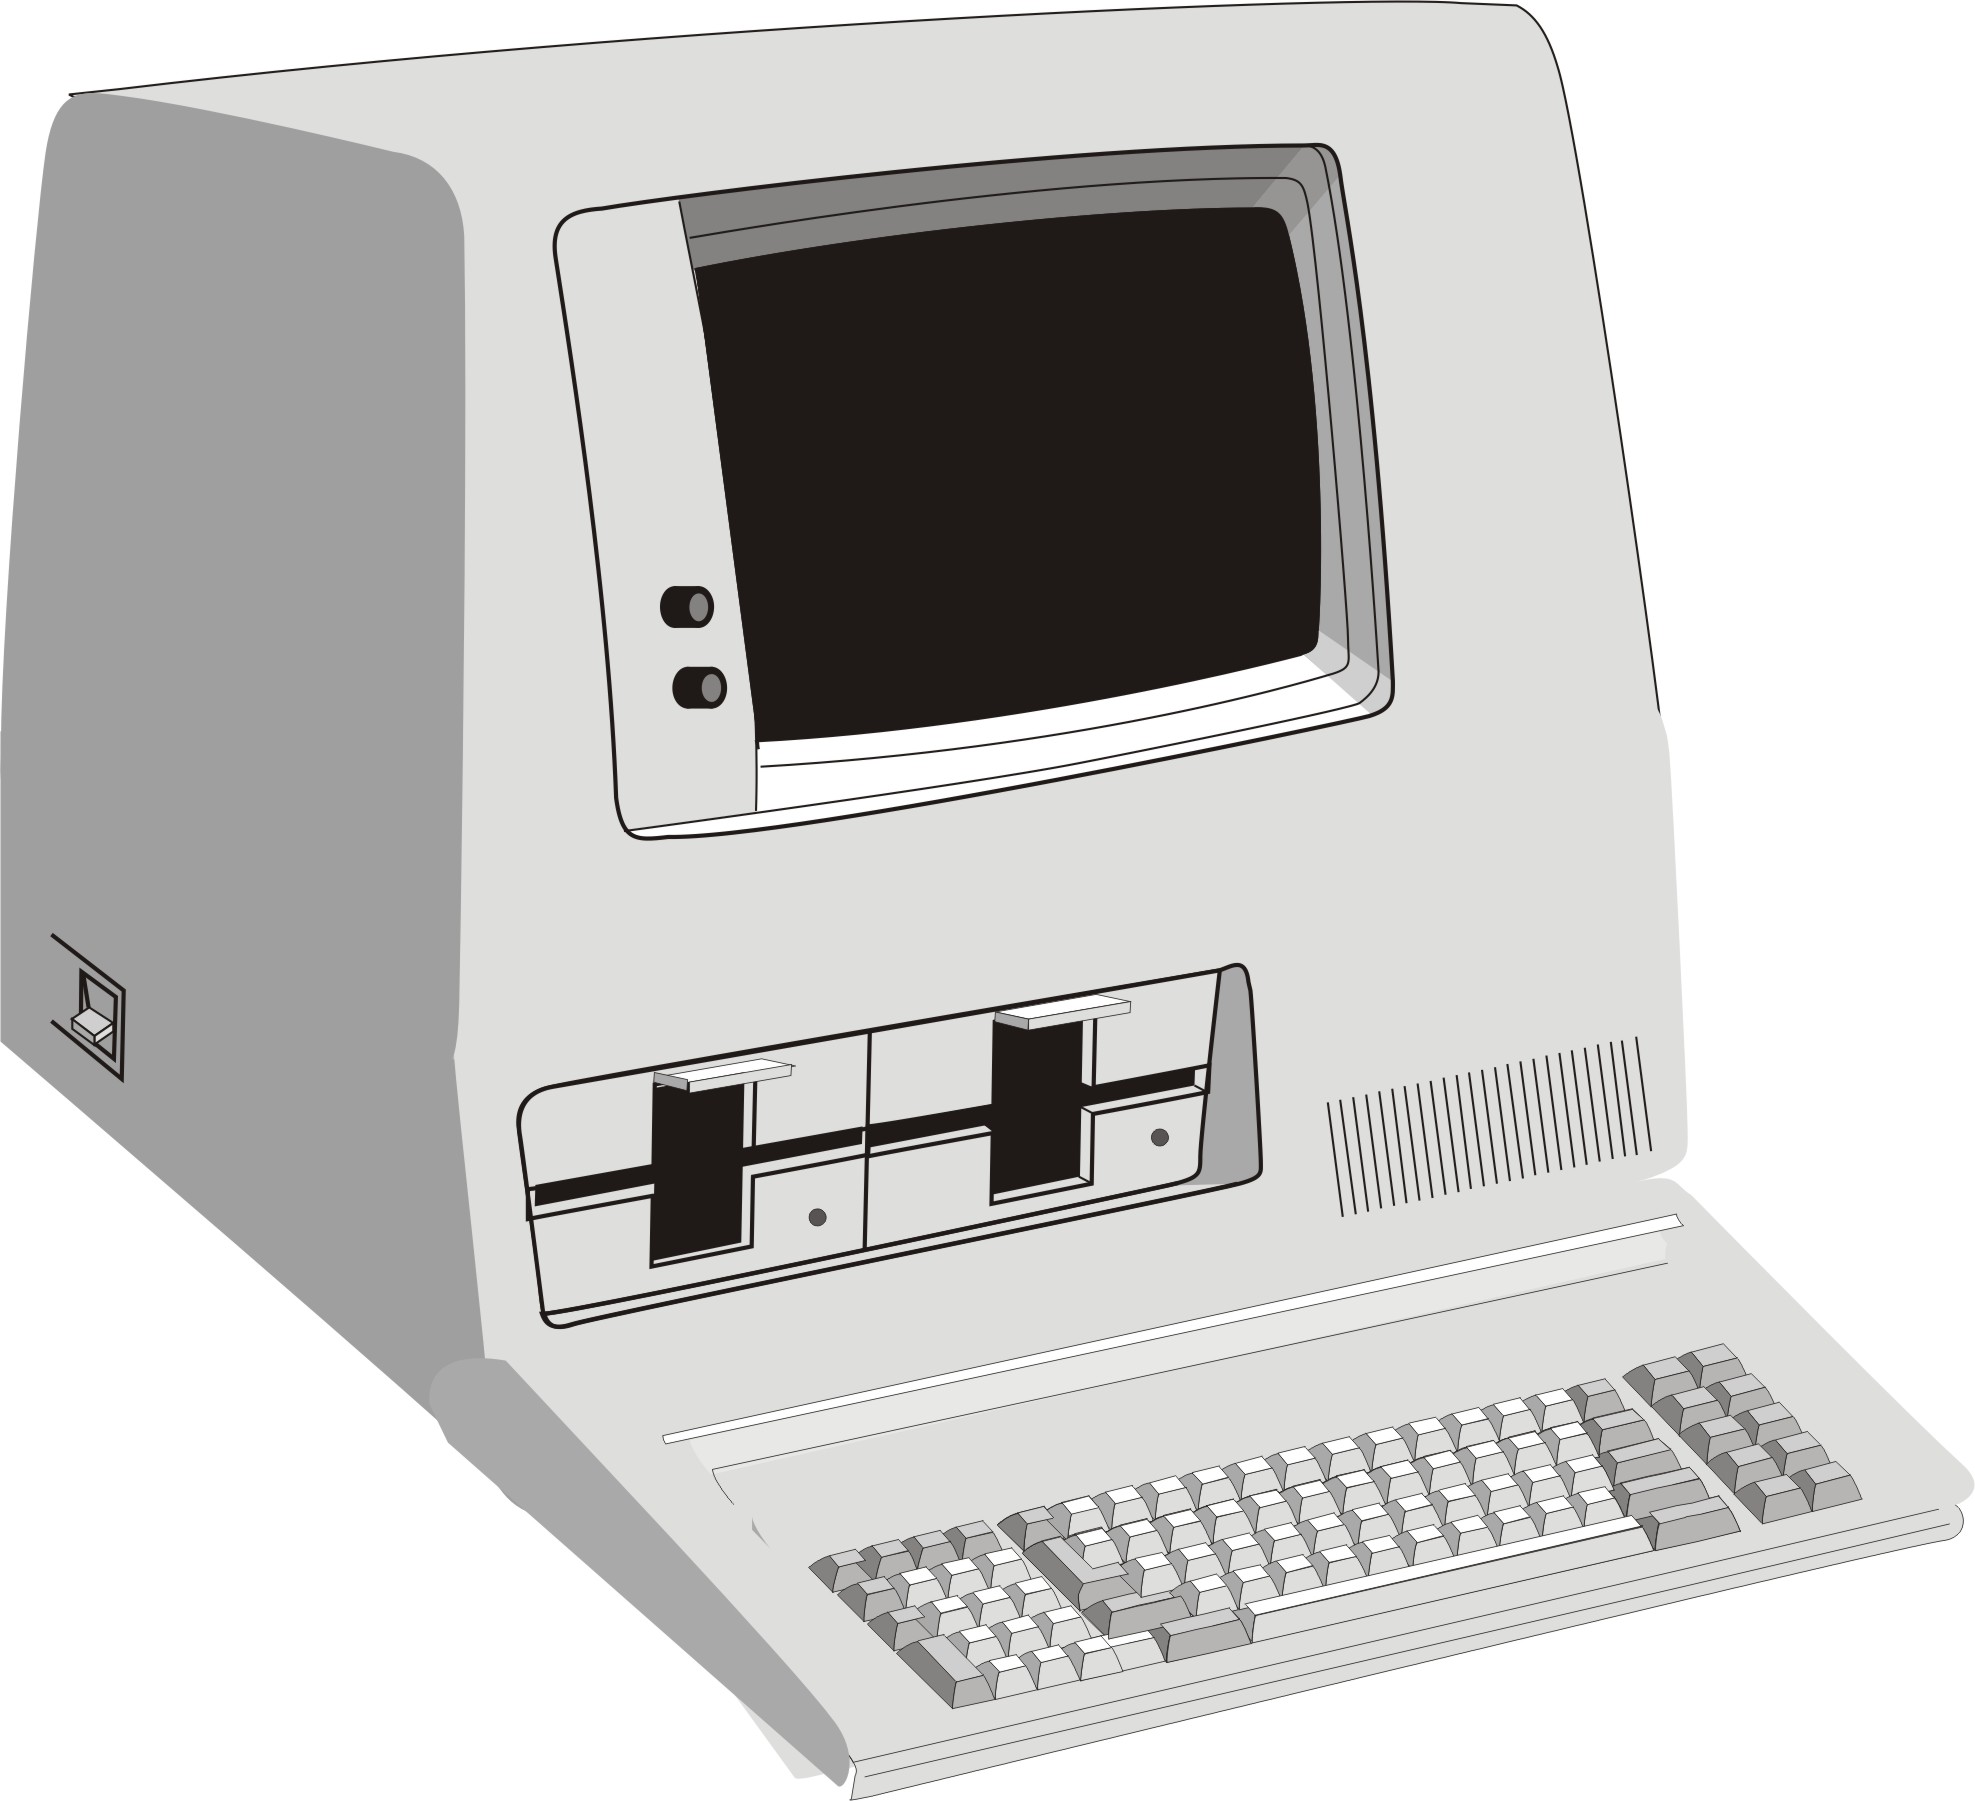 Microcomputer